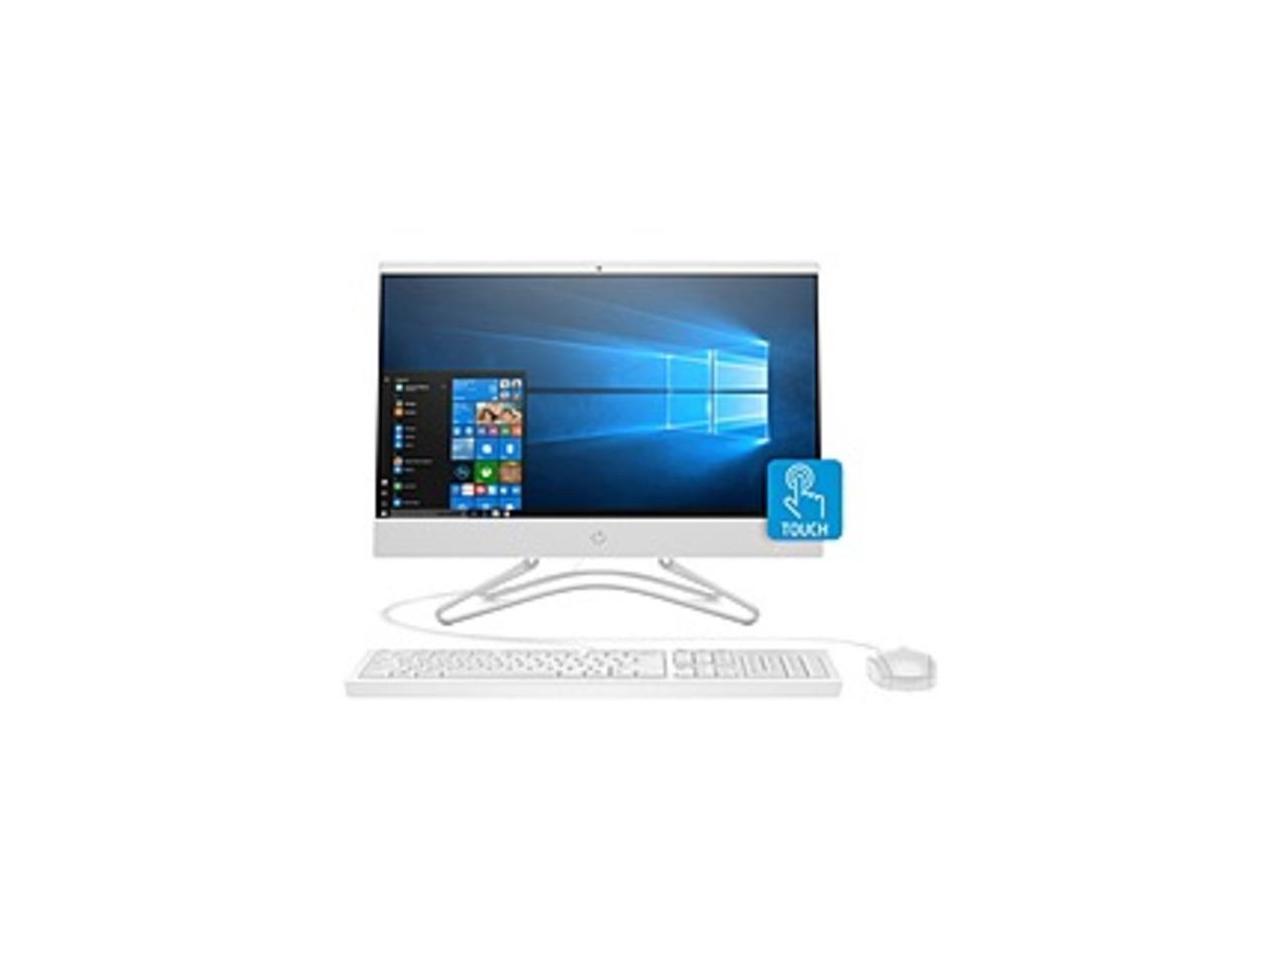 HP All-in-One Computer 22-c0030 Intel Core i3 8th Gen 8130U (2.20 GHz) 4 GB DDR4 1 TB HDD 21.5" Touchscreen Windows 10 Home 64-Bit